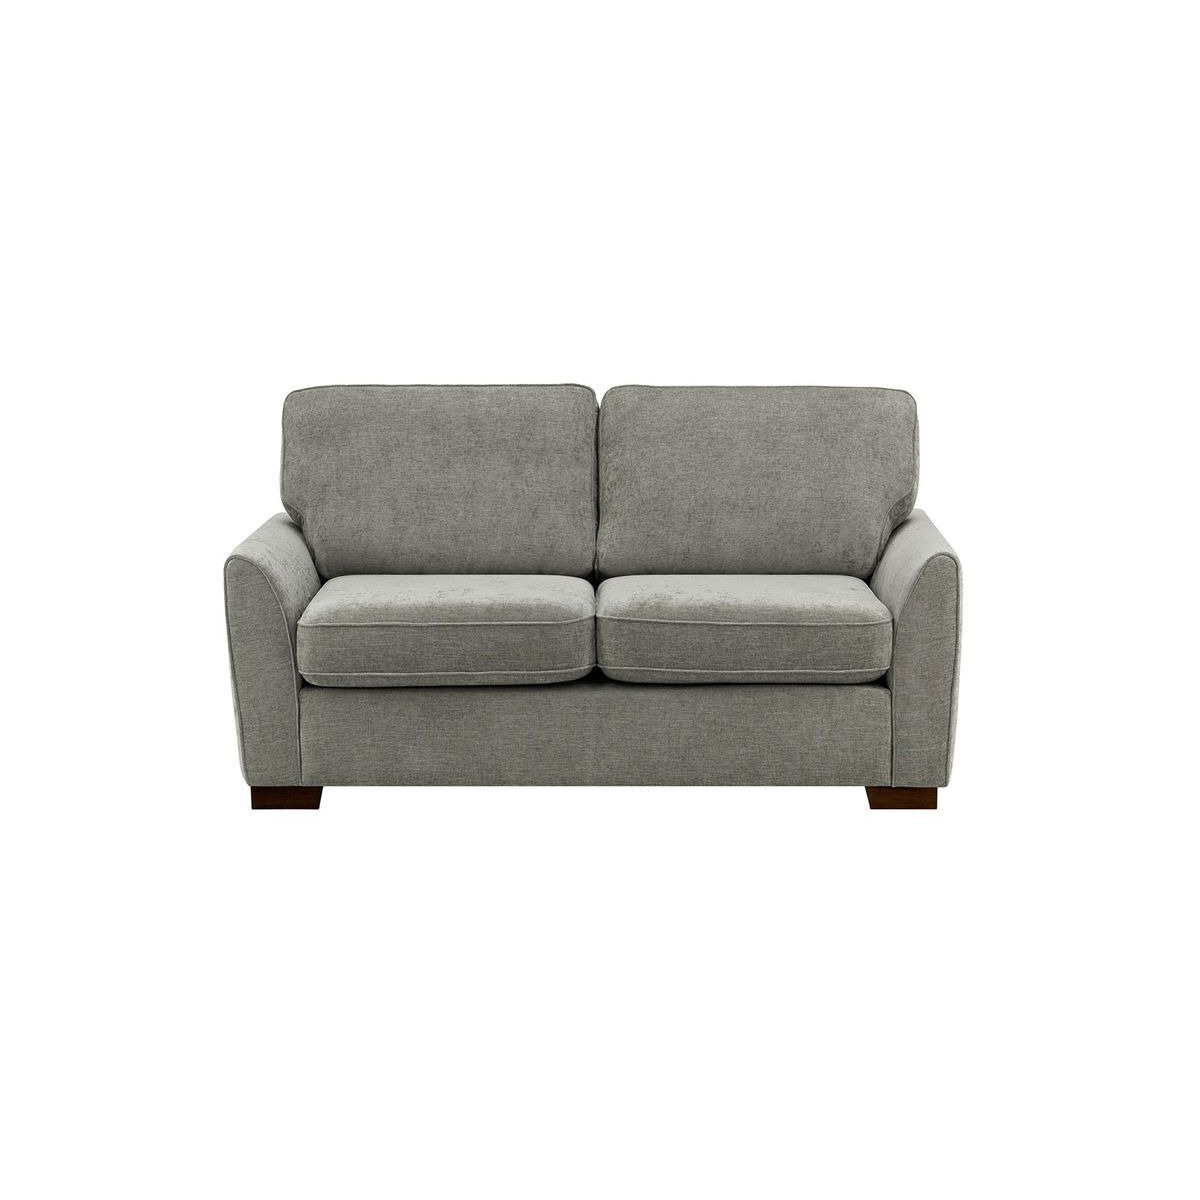 Newton 2 Seater Sofa, grey, Leg colour: dark oak - image 1